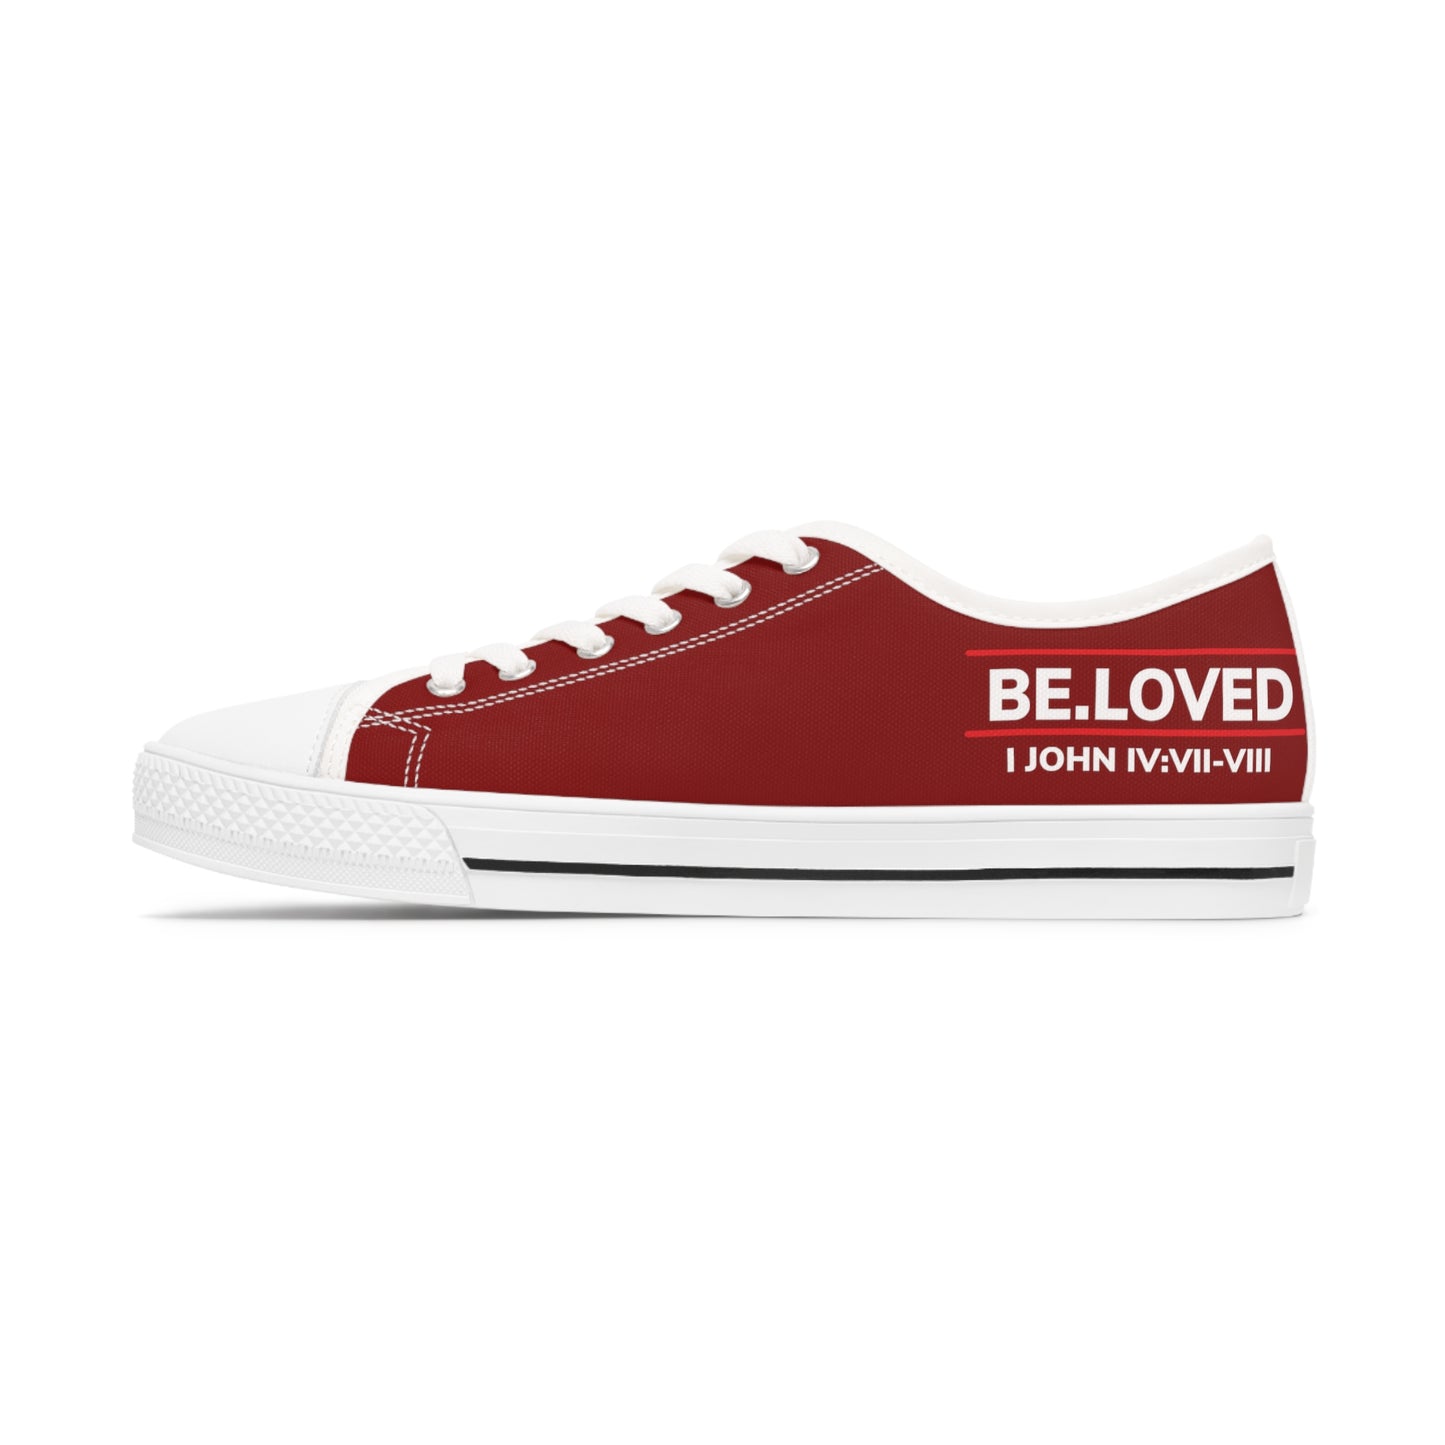 BE.LOVED Deep Red Women's Low Top Sneakers